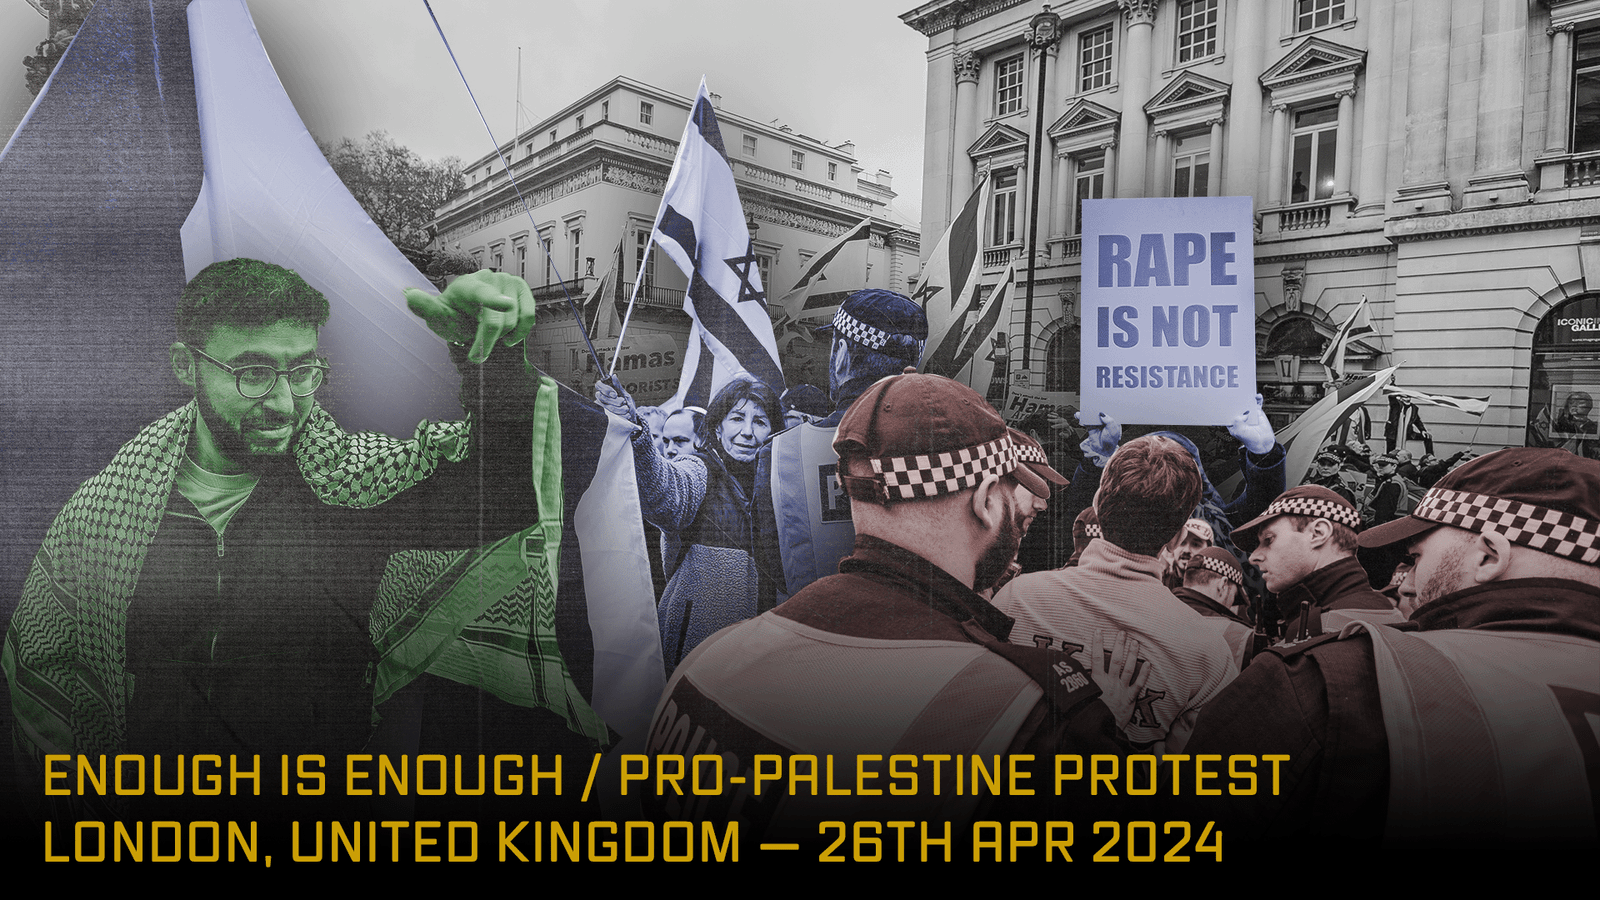 ENOUGH IS ENOUGH / PRO-PALESTINE PROTEST LONDON, UNITED KINGDOM — 26TH APR 2024